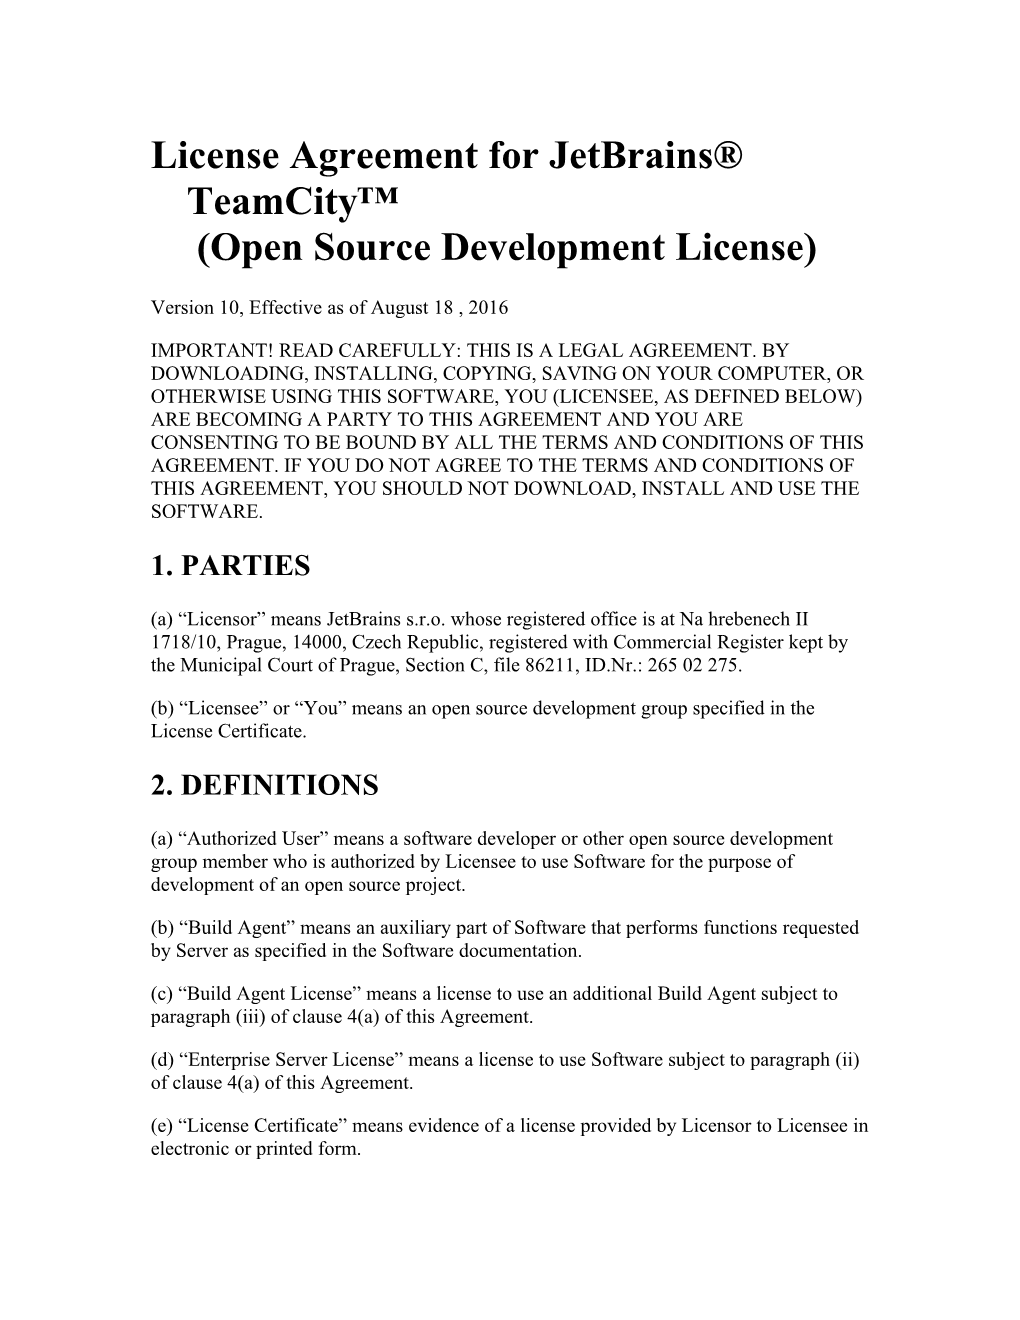 License Agreement for Jetbrains Teamcity (Open Source Development License)